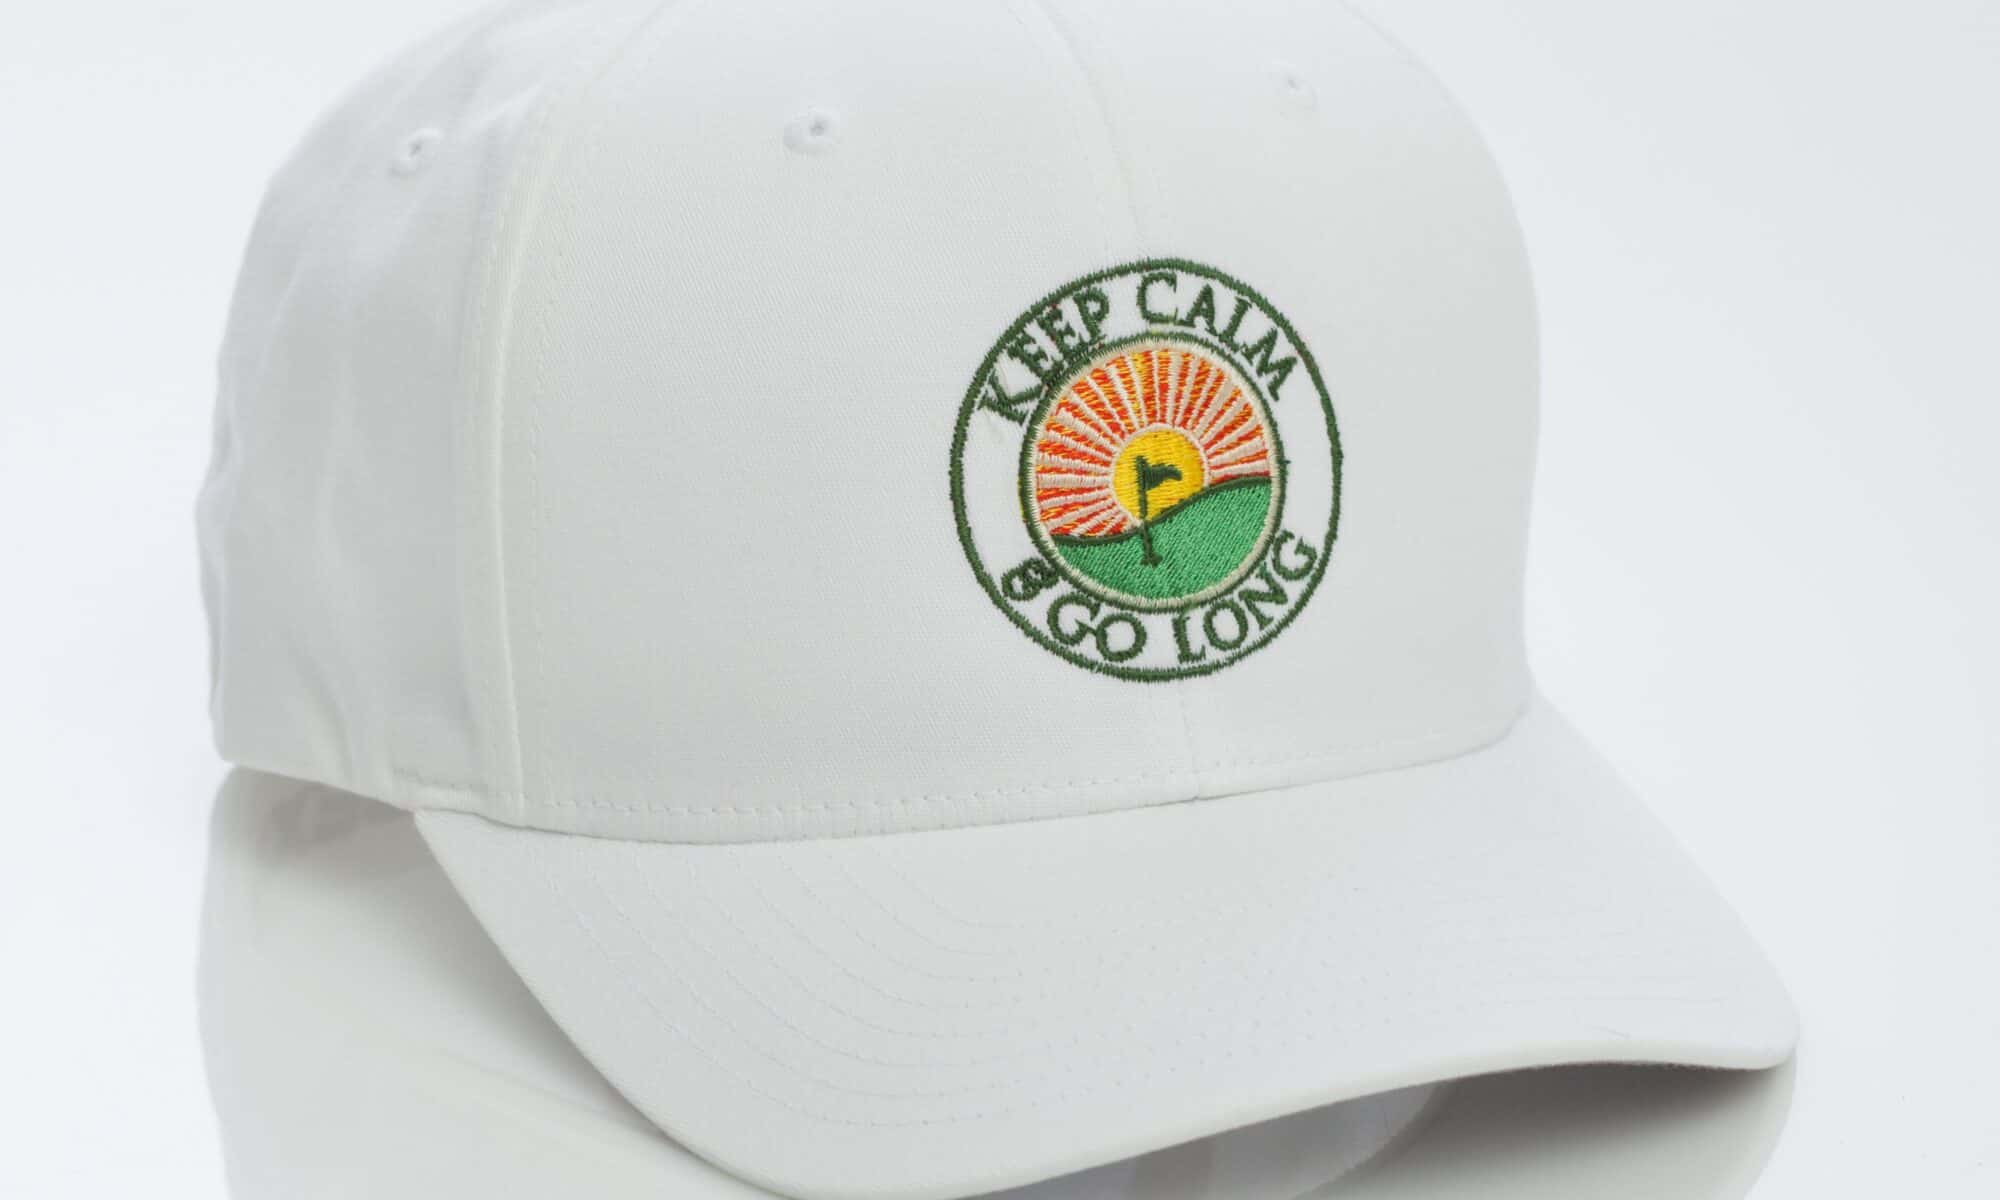 Stay Calm golf hat